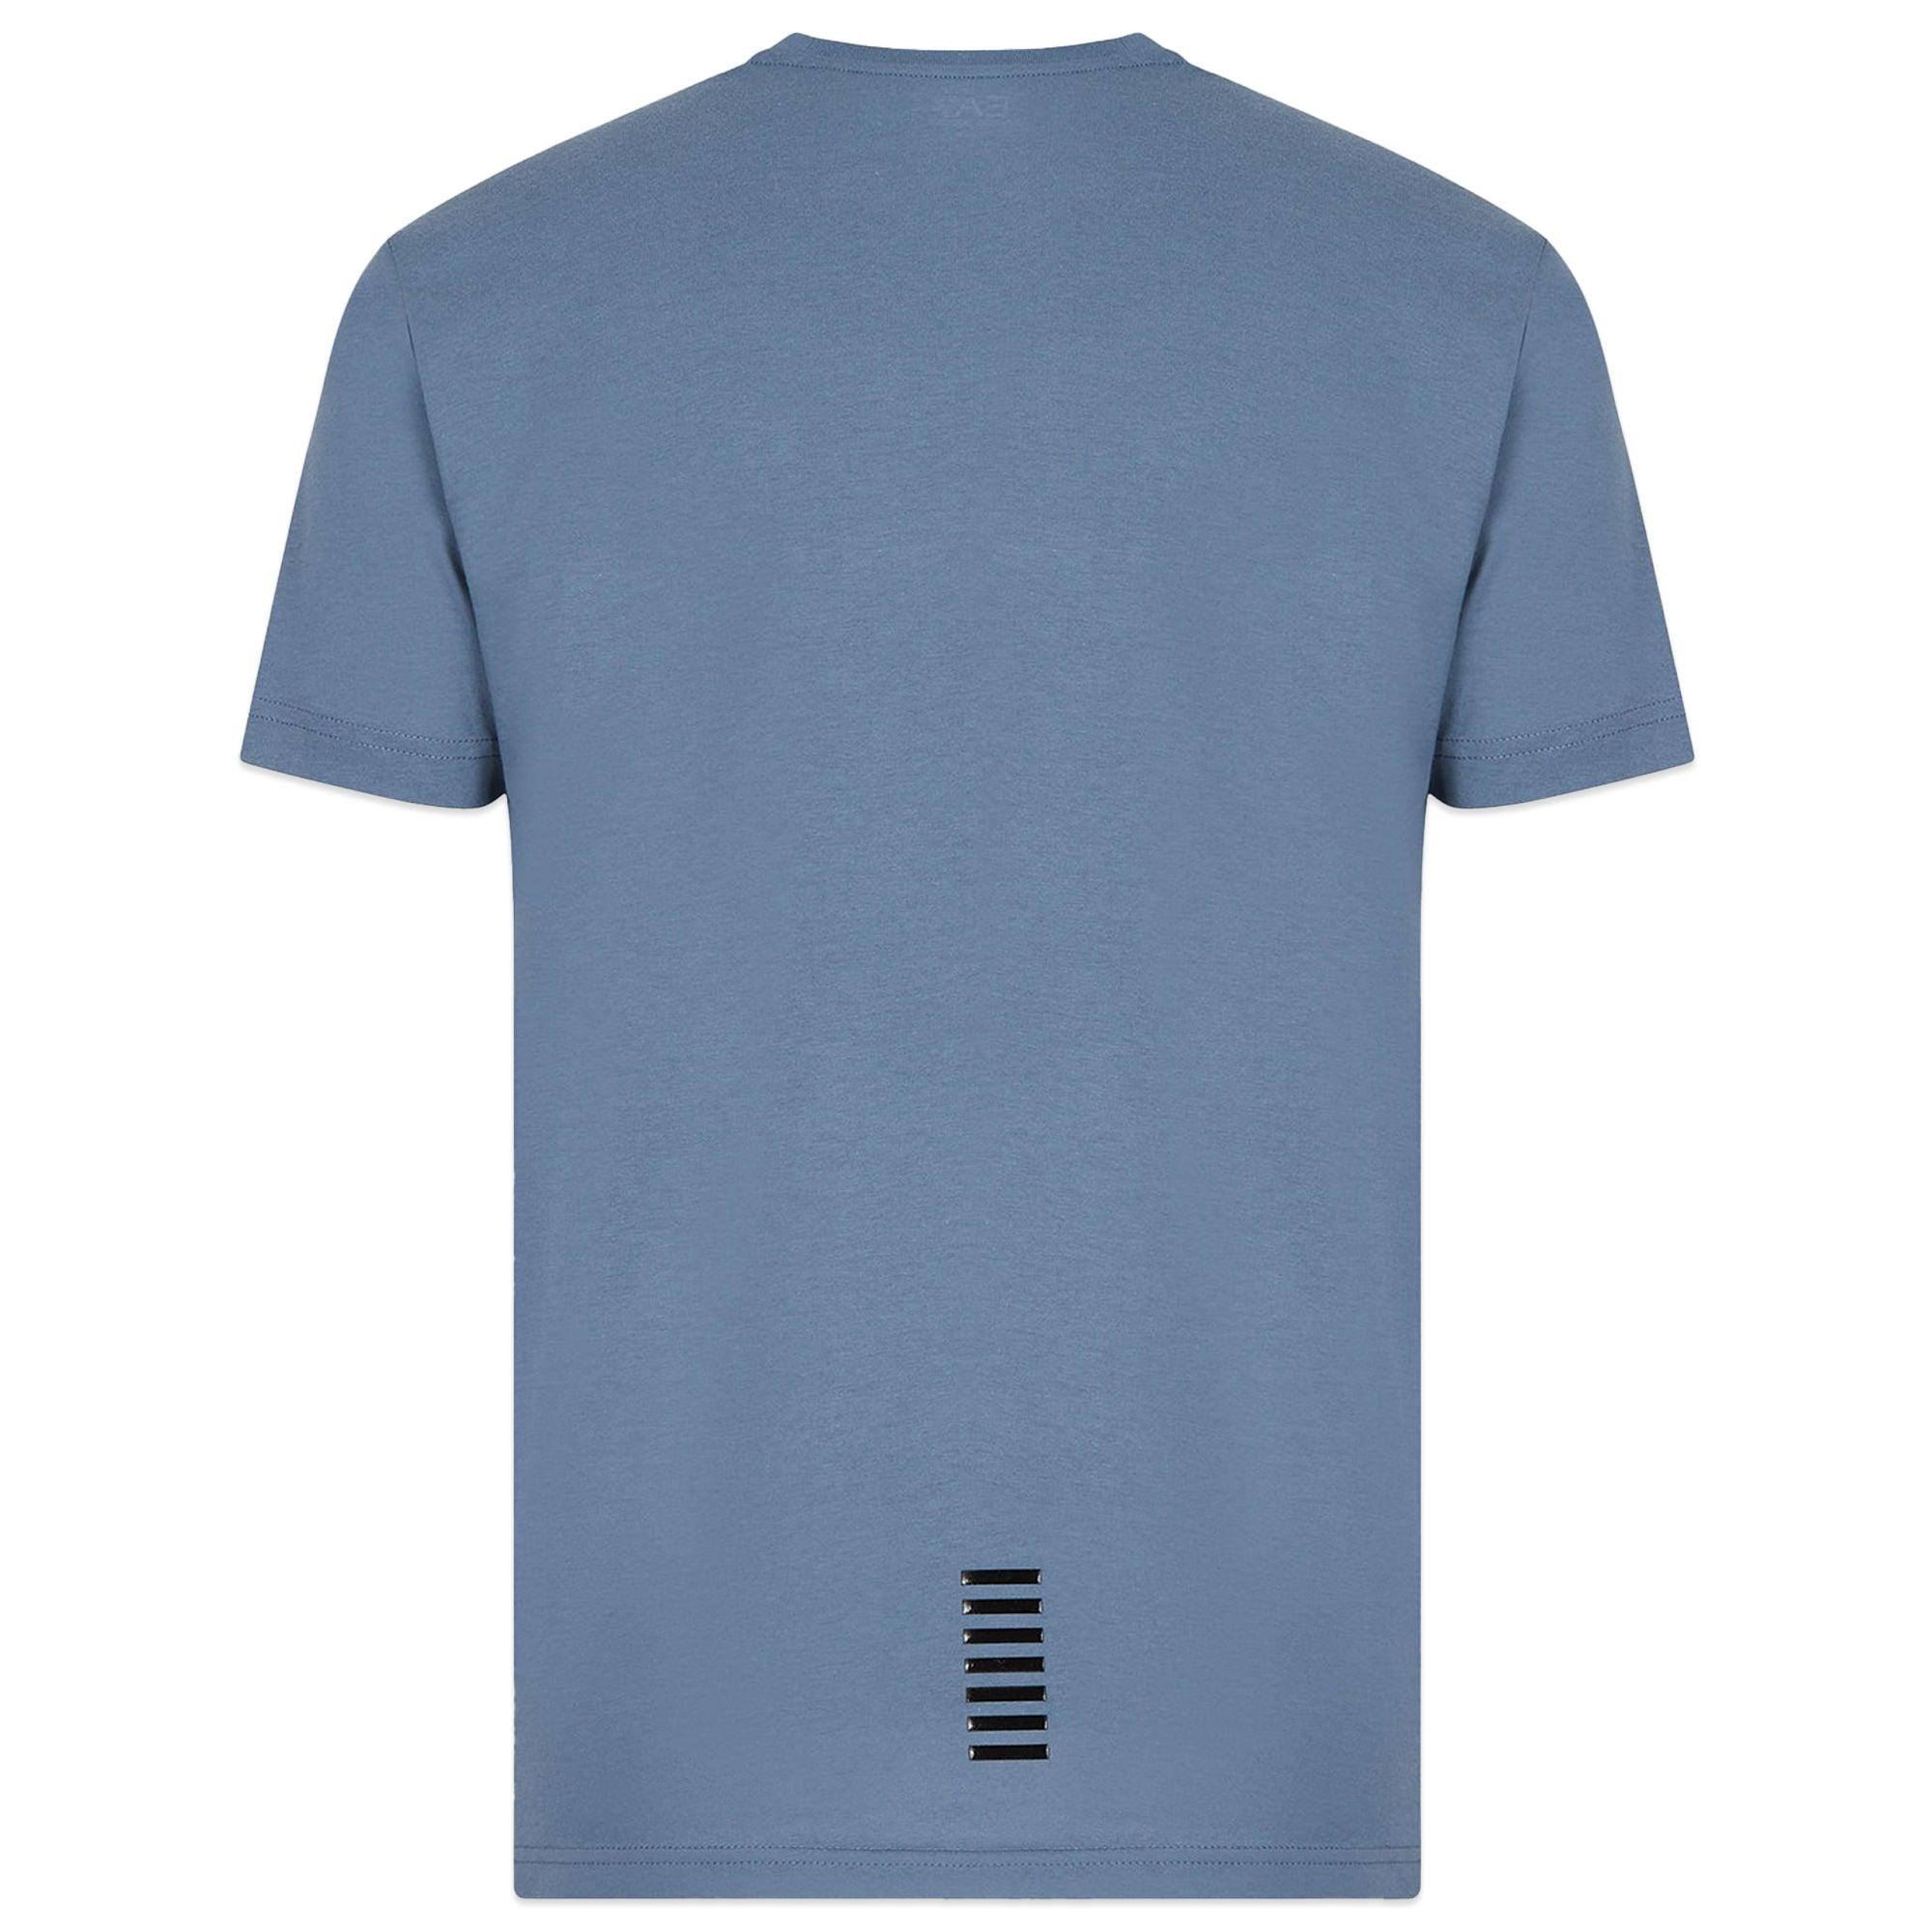 EA7 Armani Ea7 Core Id T-shirt in Blue for Men | Lyst